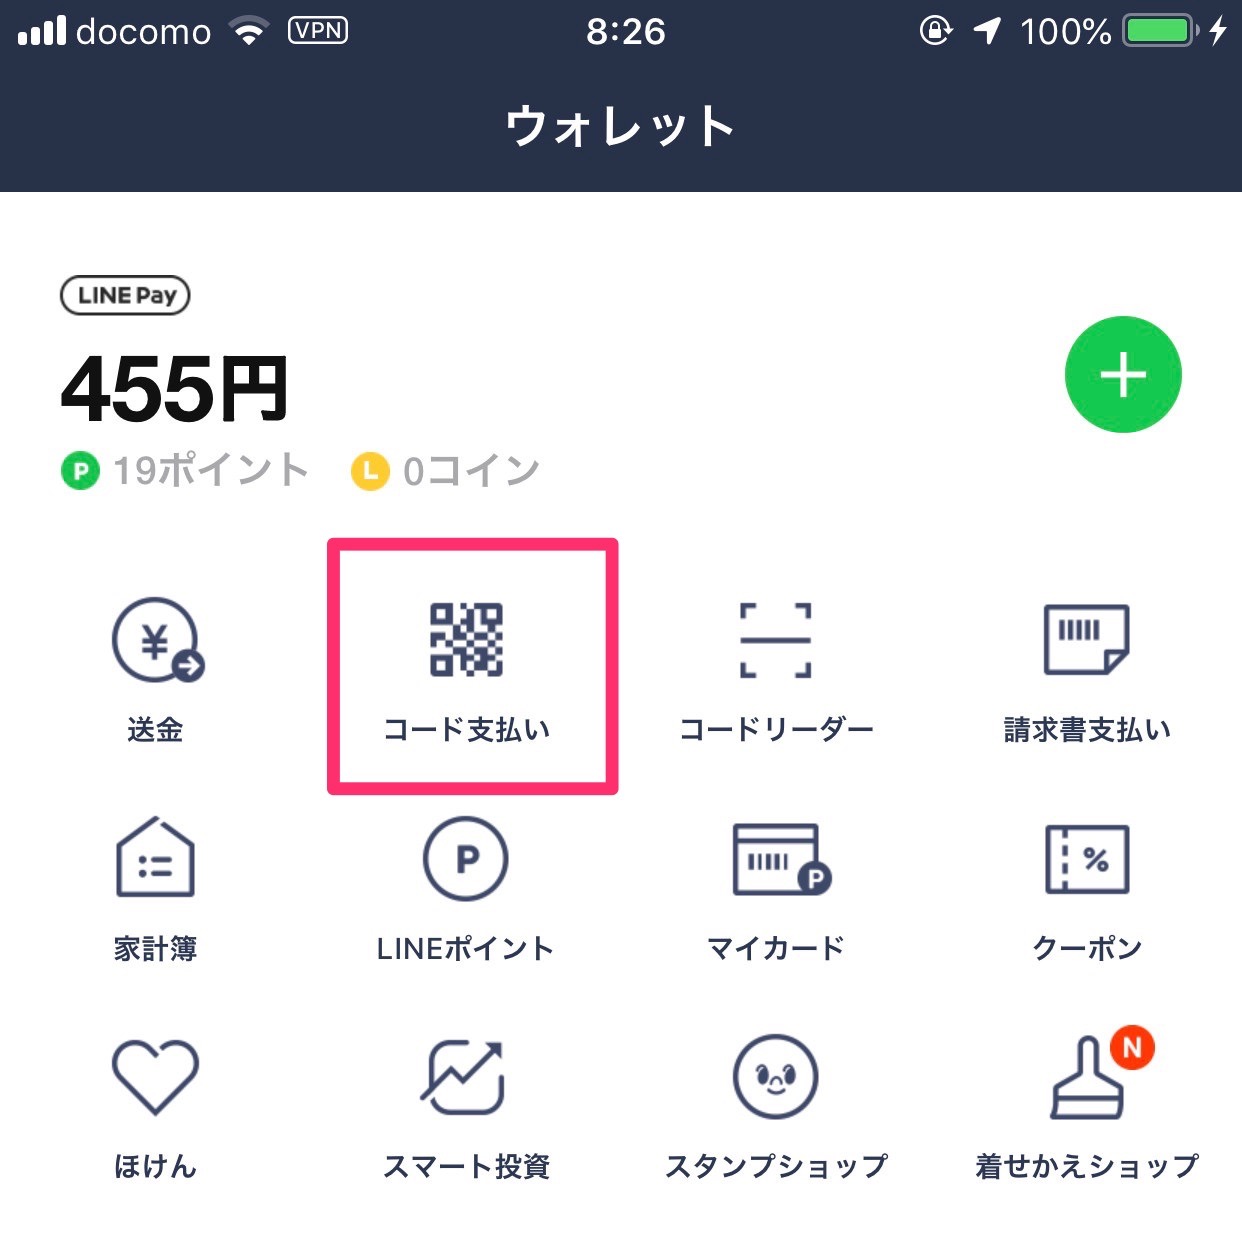 【LINE Pay】ファミリーマート限定20%還元キャンペーン（2/21まで）